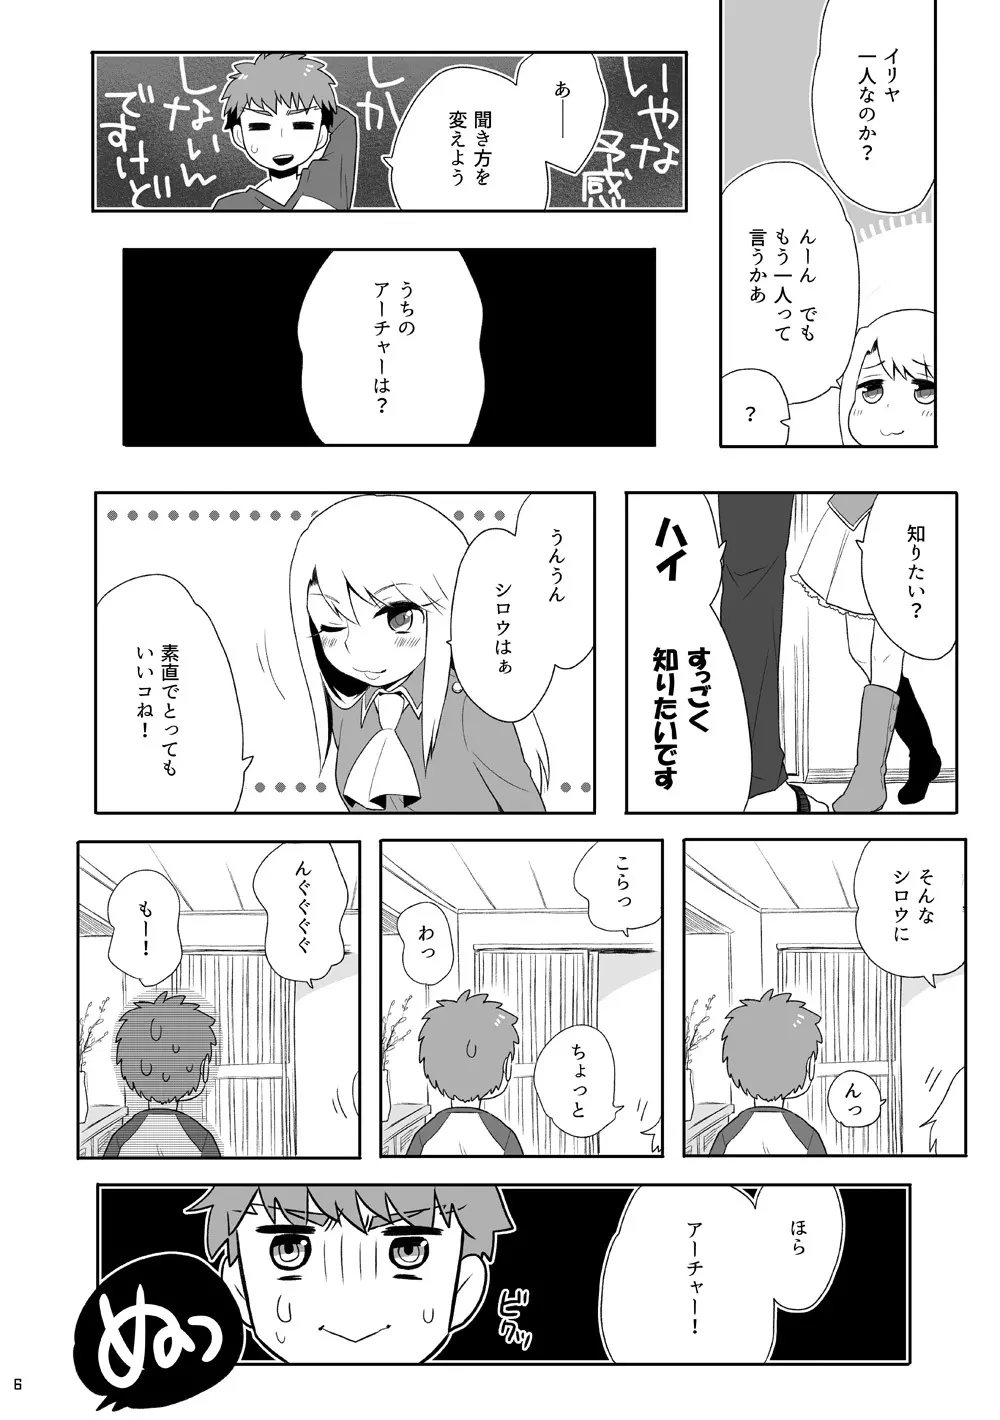 弓士本 - page5